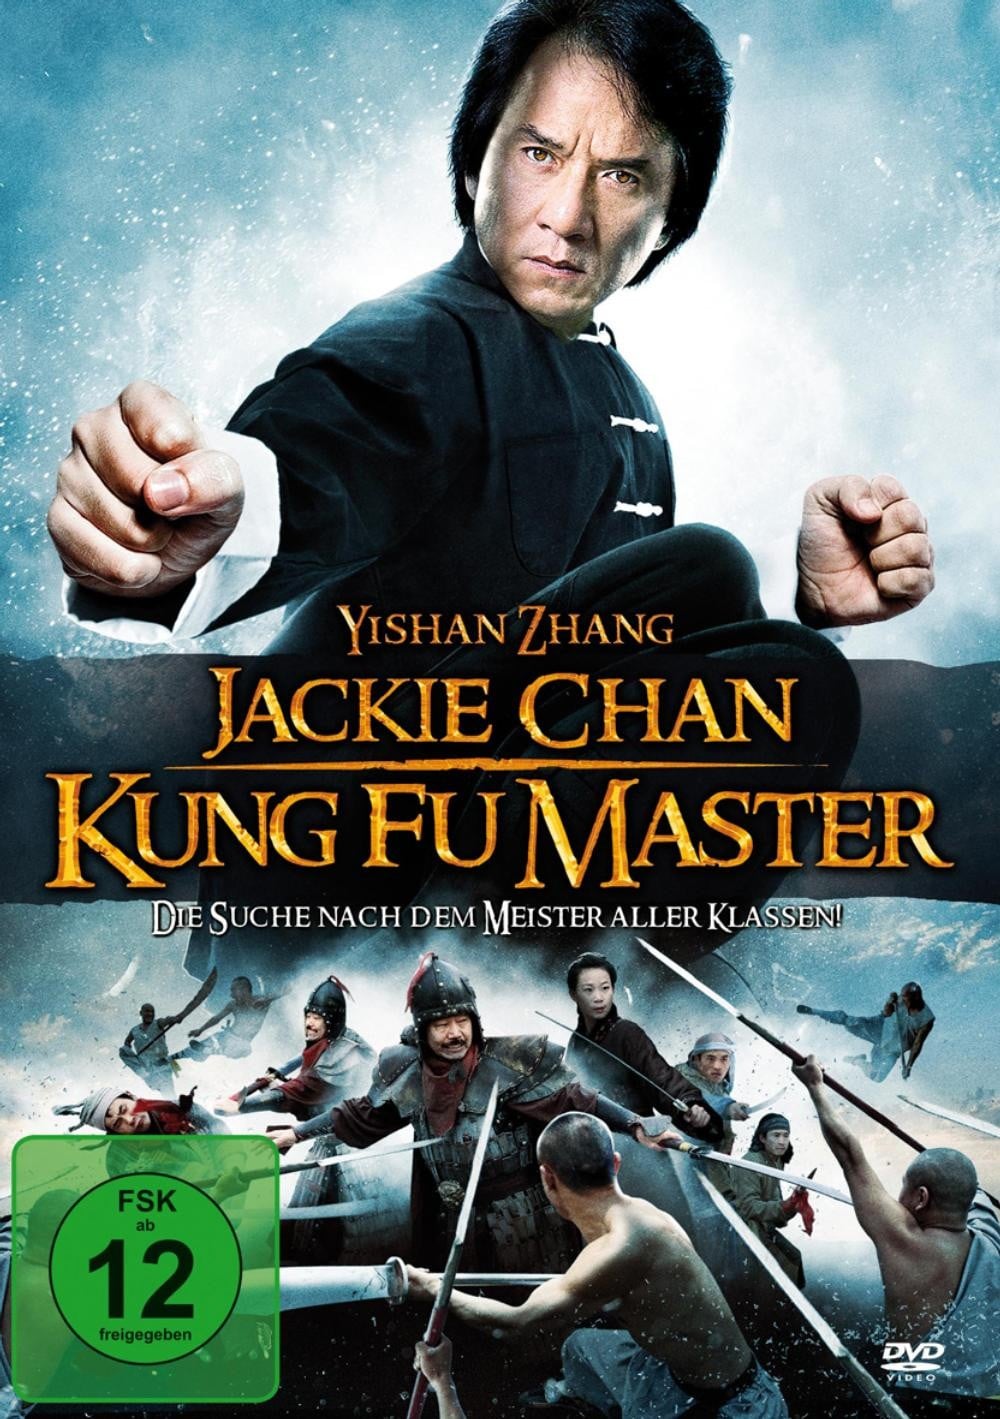 Plakat von "Jackie Chan - Kung Fu Master"